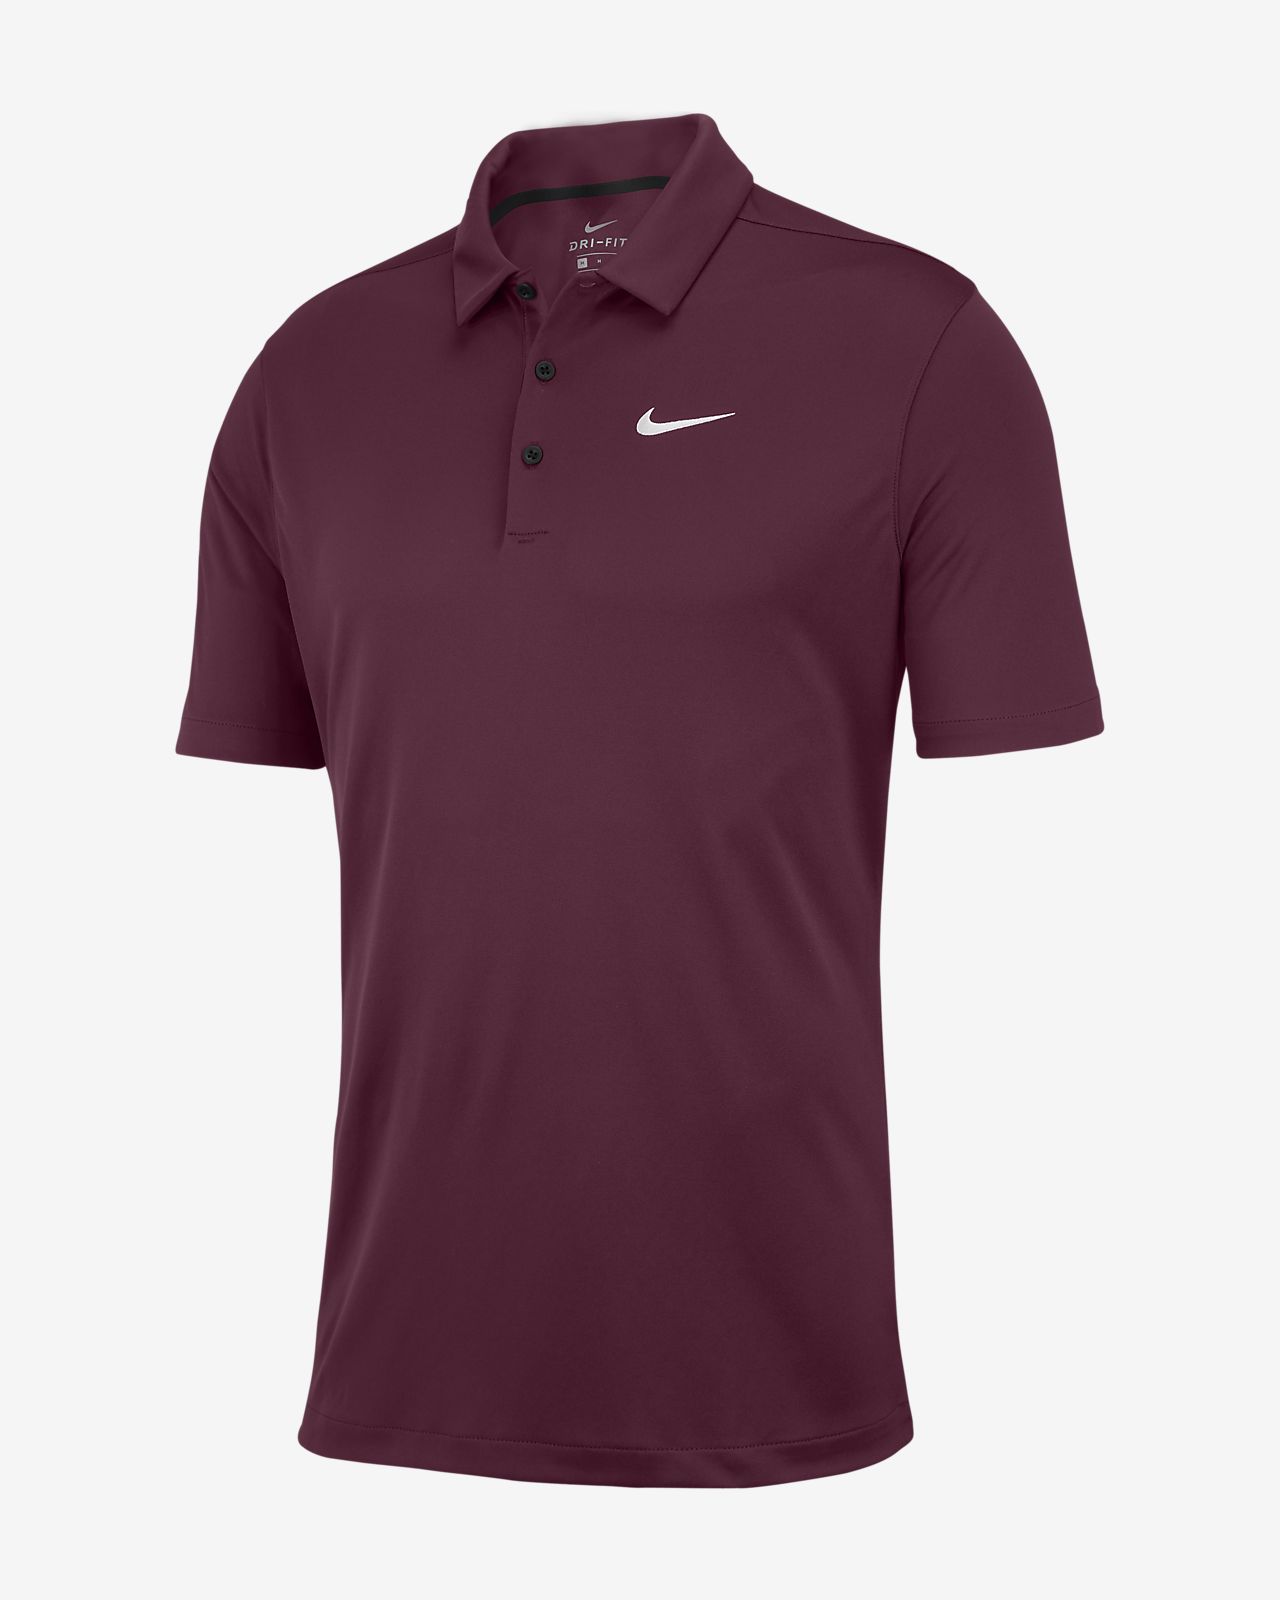 Nike Dri Fit Polo Shirt Size Chart